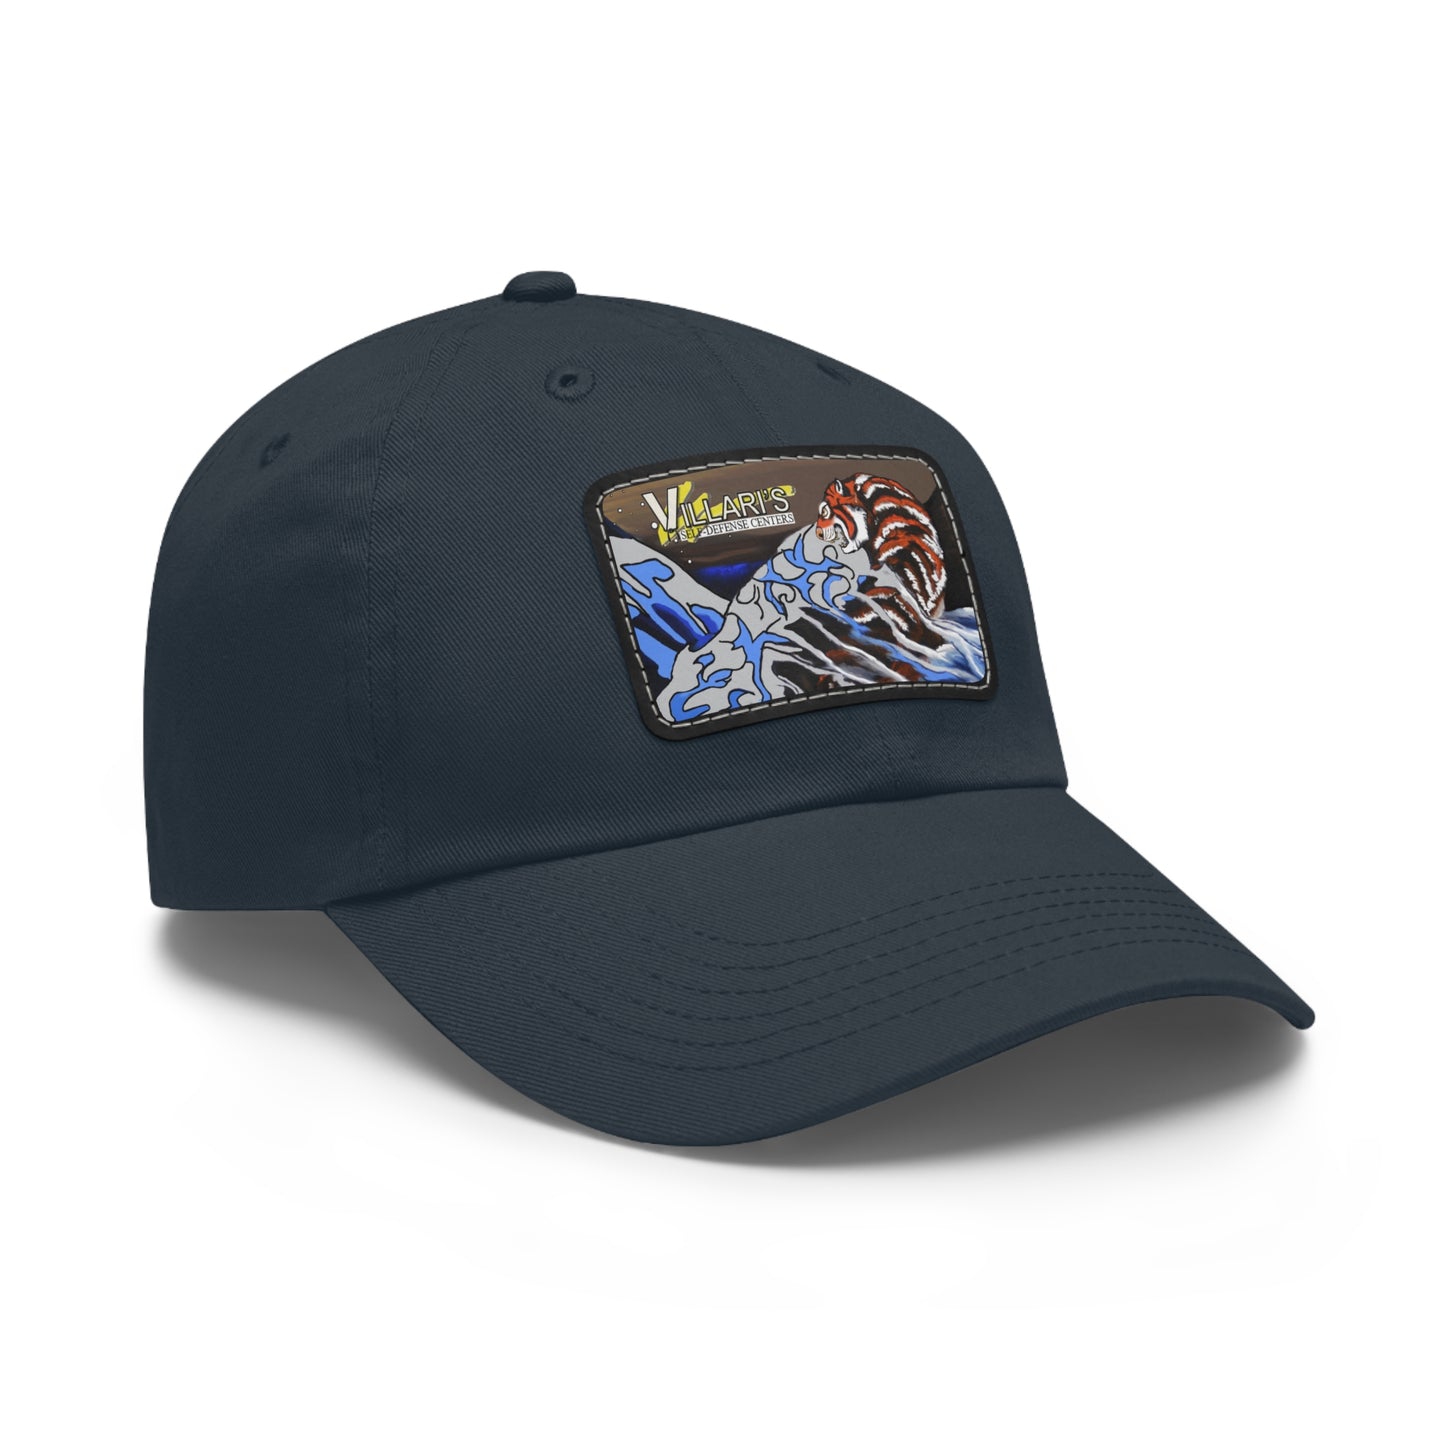 Tiger Baseball Hat